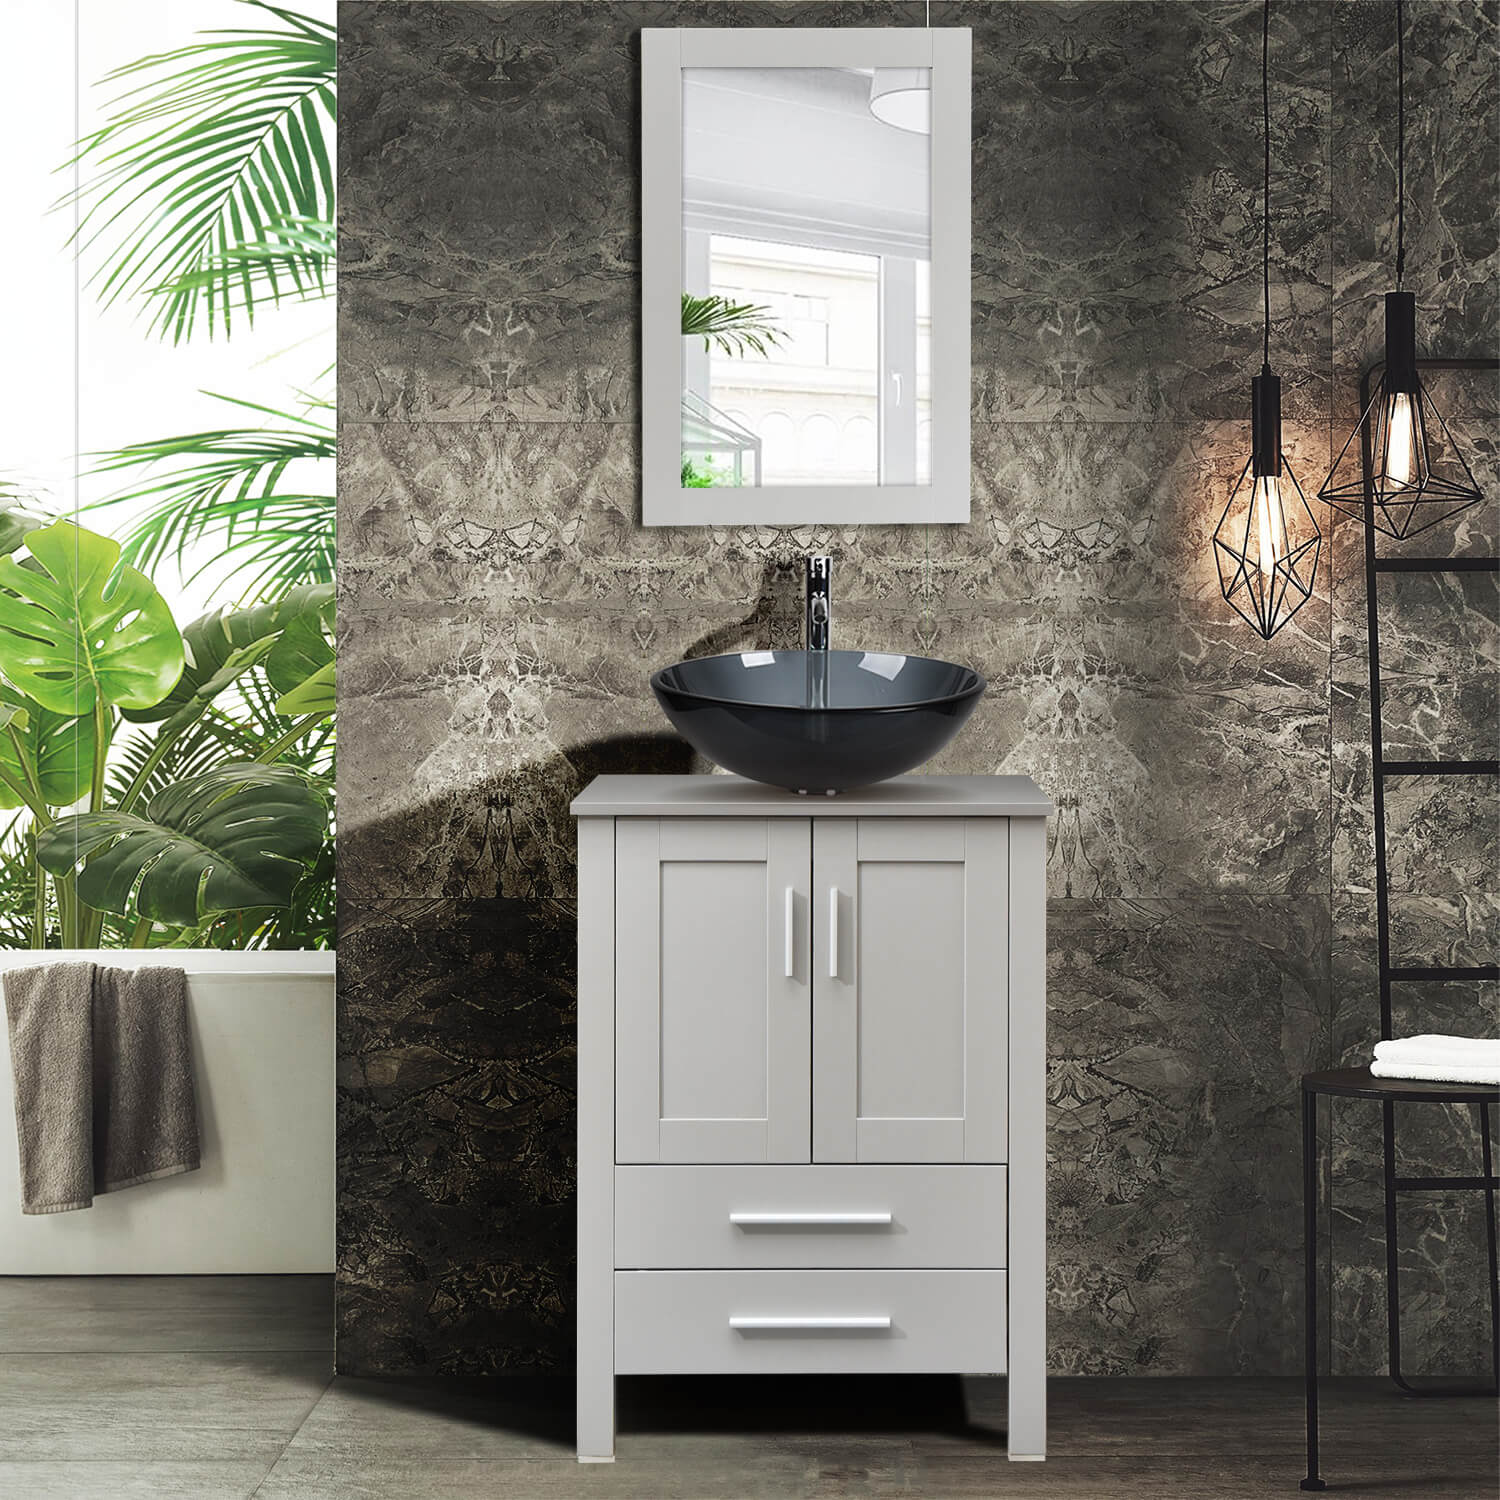 Elecwish gray wood bathroom vanity with bluish grey glass sink BG003 in modern bathroom